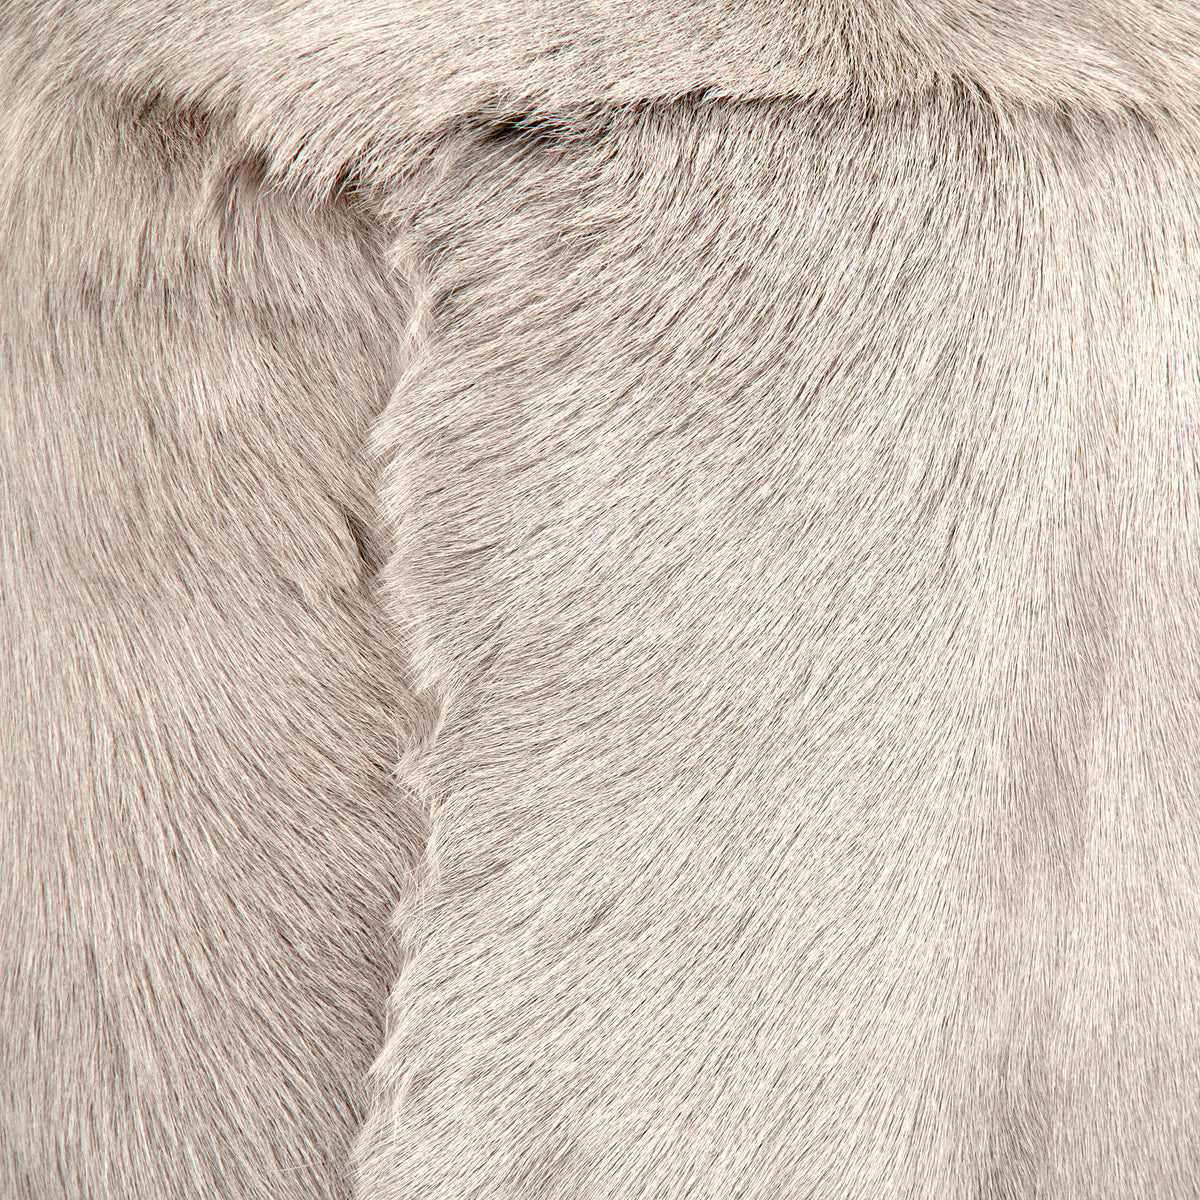 Tibetan Light Grey Goat Fur Pouf by Zentique